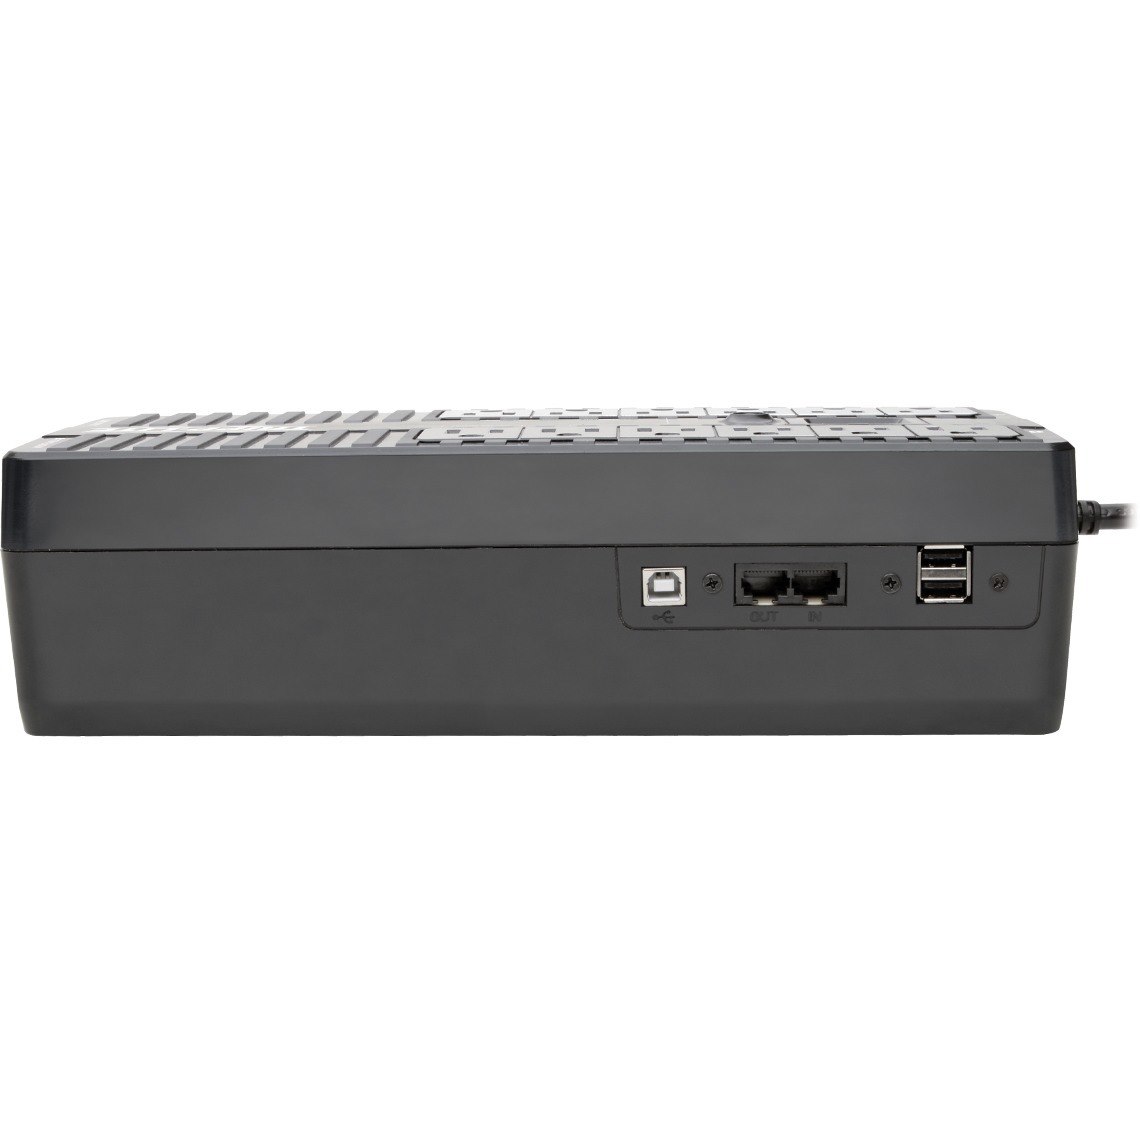 Tripp Lite by Eaton 900VA 480W Standby UPS - 12 5-15R Outlets, 120V, 50/60 Hz, 5-15P Plug, USB, ENERGY STAR, Desktop/Wall Battery Backup